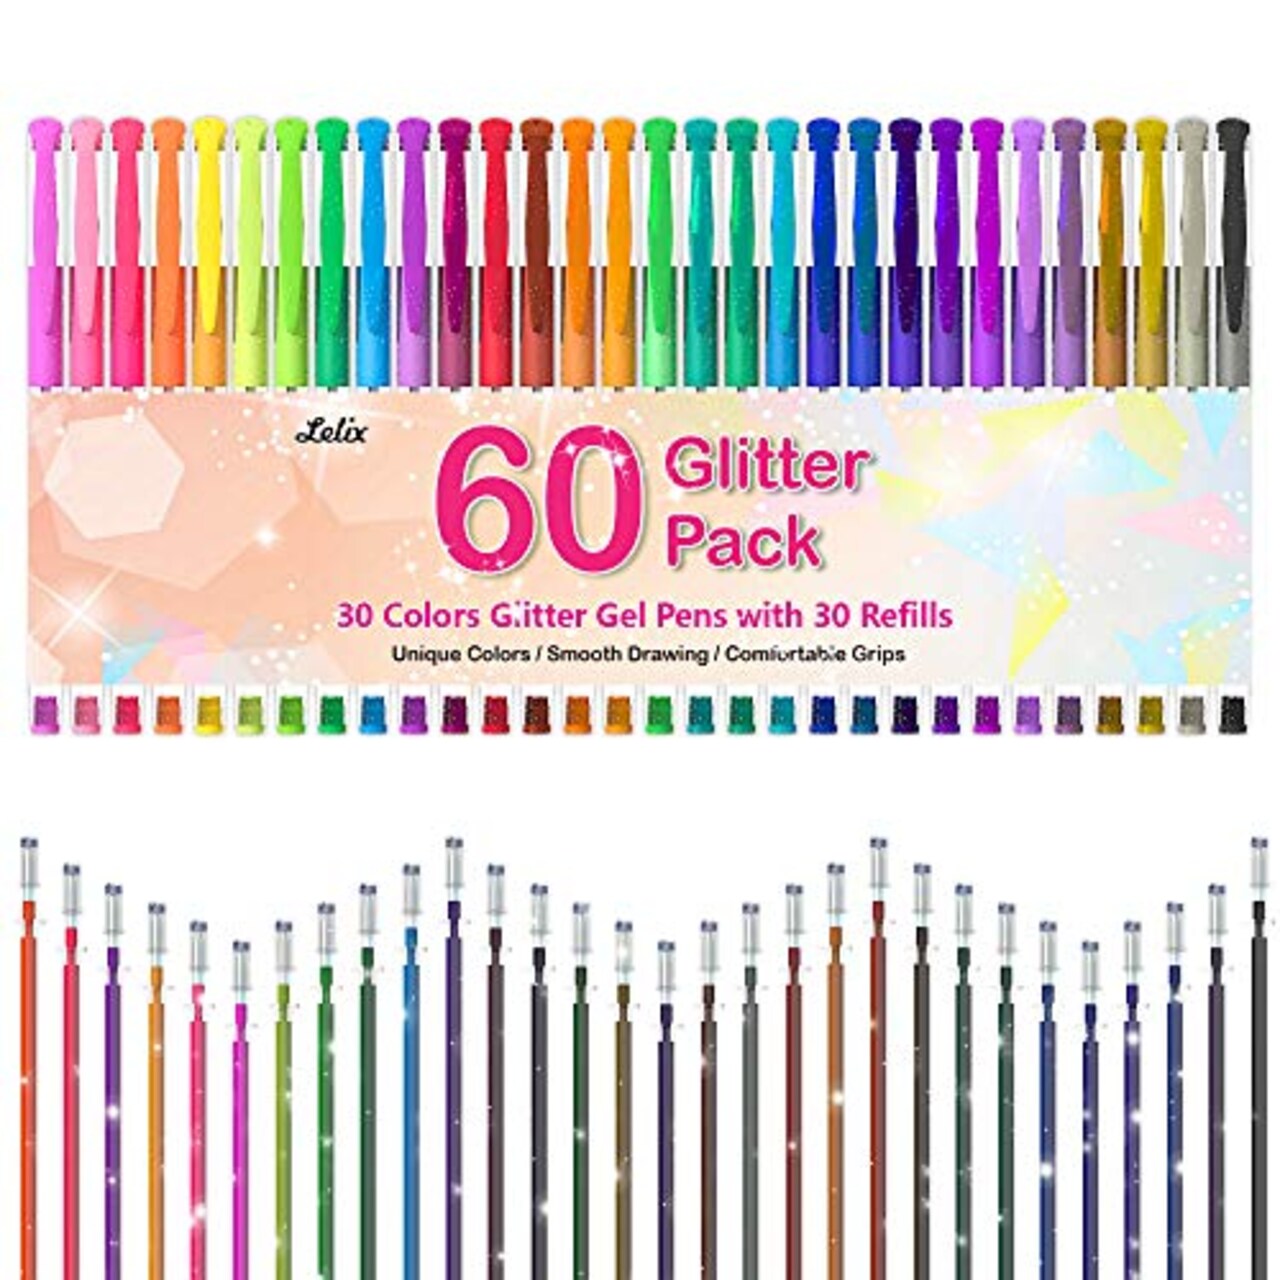 Glitter Gel Pens, Lelix 60 Pack Glitter Gel Pen Set, 30 Glitter